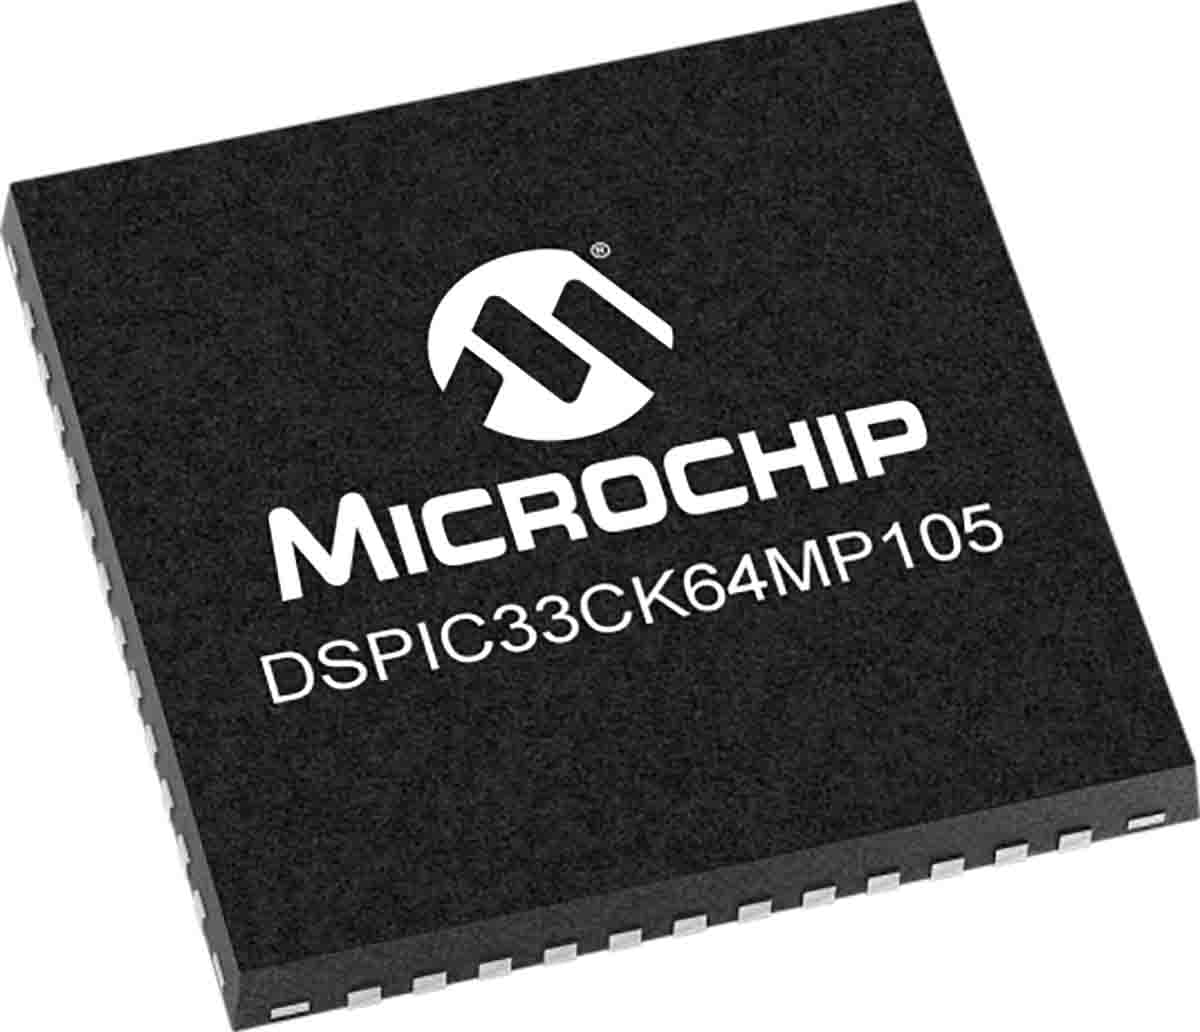 Microchip DSPIC33CK64MP105-I/M4, Microprocessor dsPIC 16bit 100MHz 48-Pin UQFN